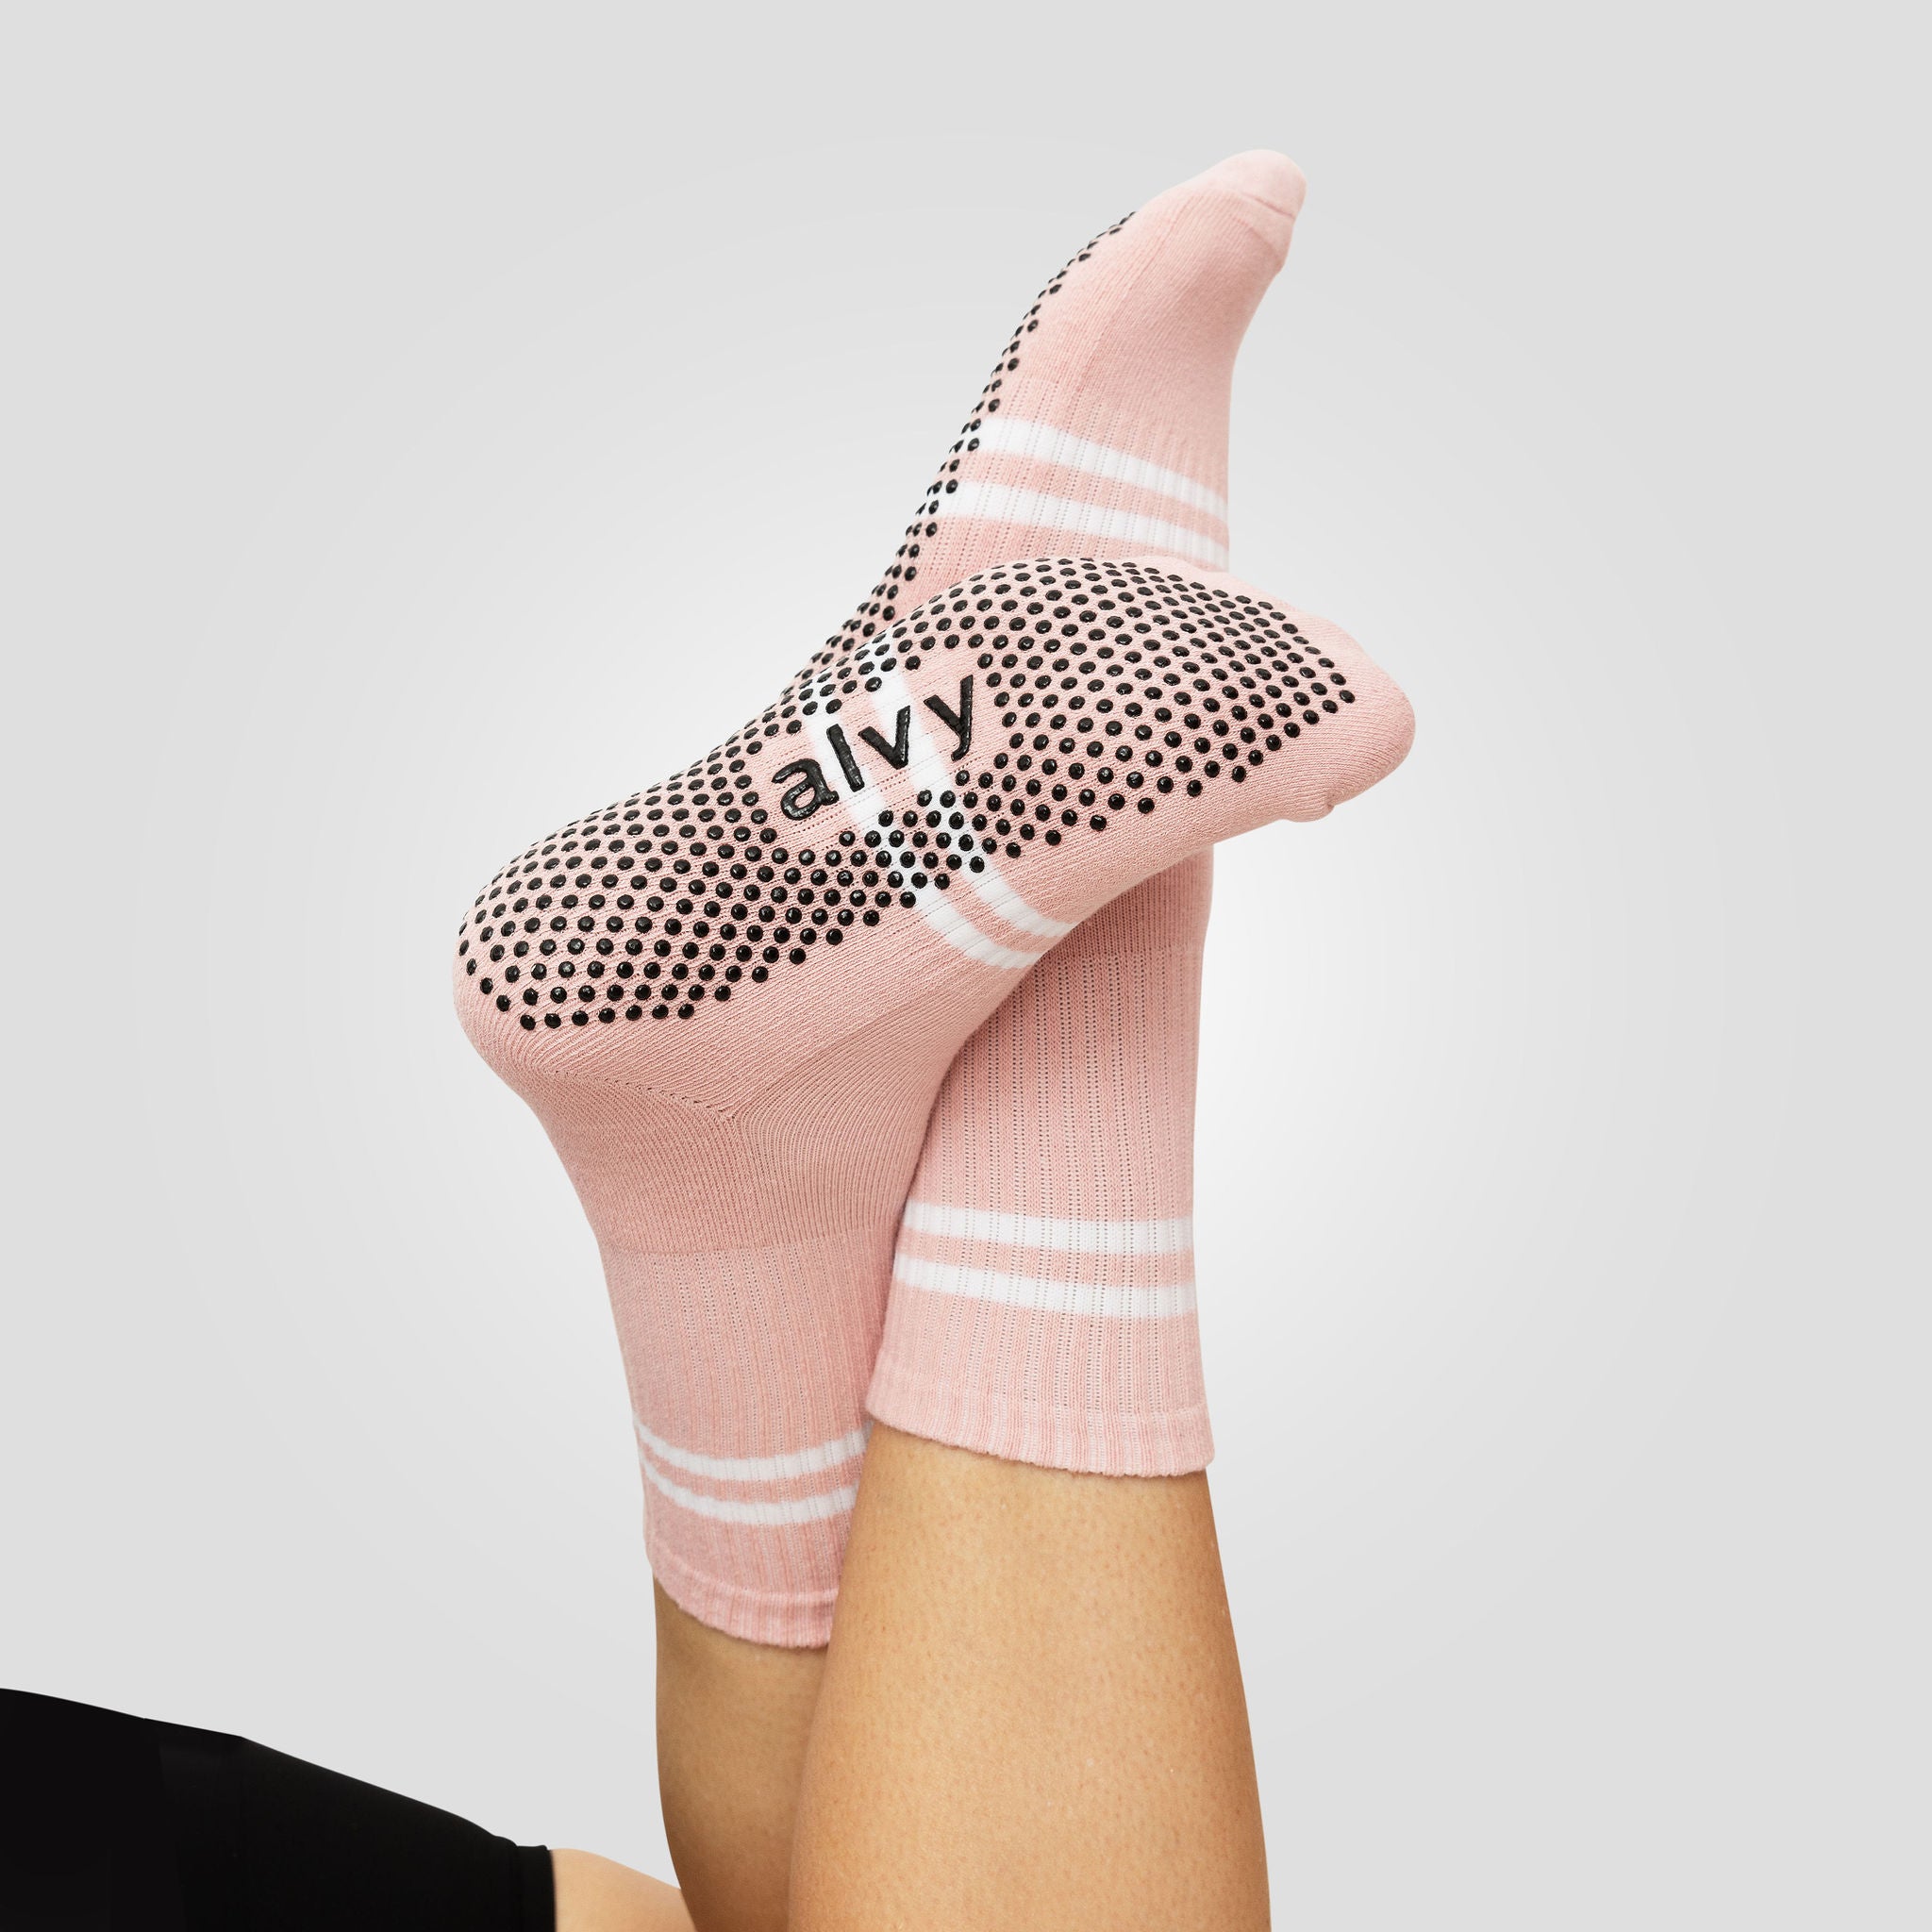 Alvy crew baby pink grip sock lifestyle